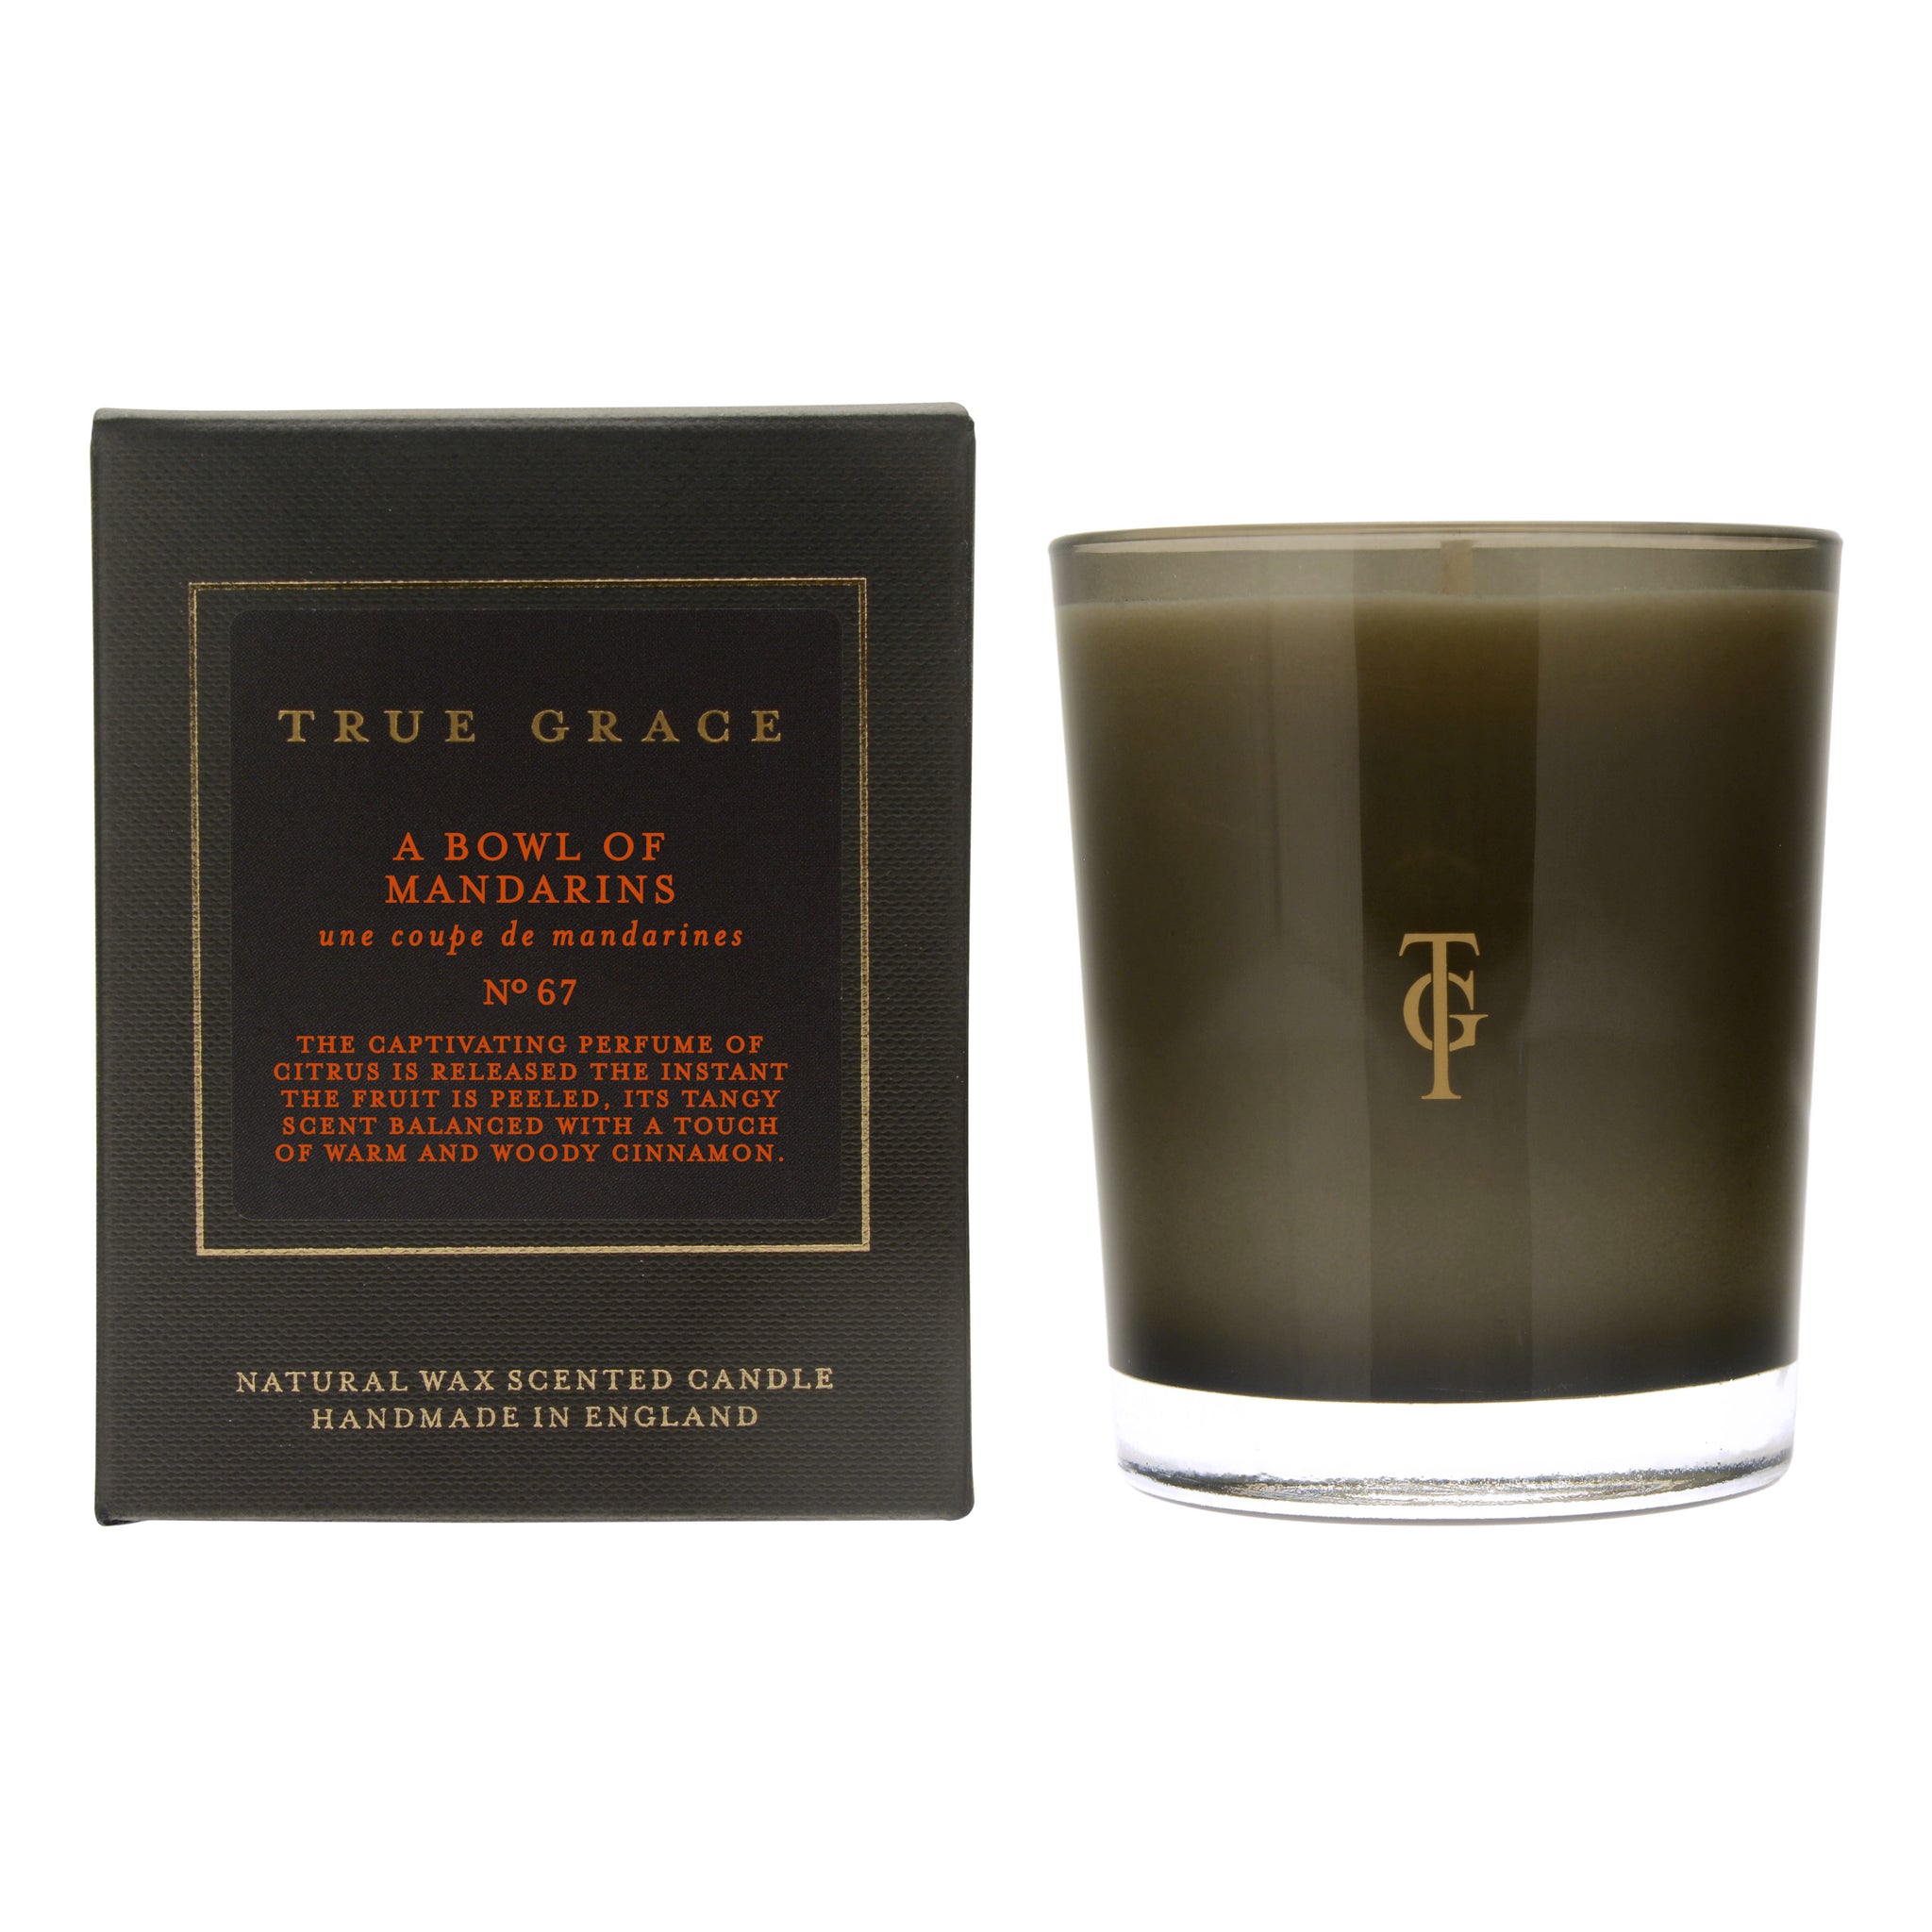 True Grace Candle - A Bowl of Mandarins